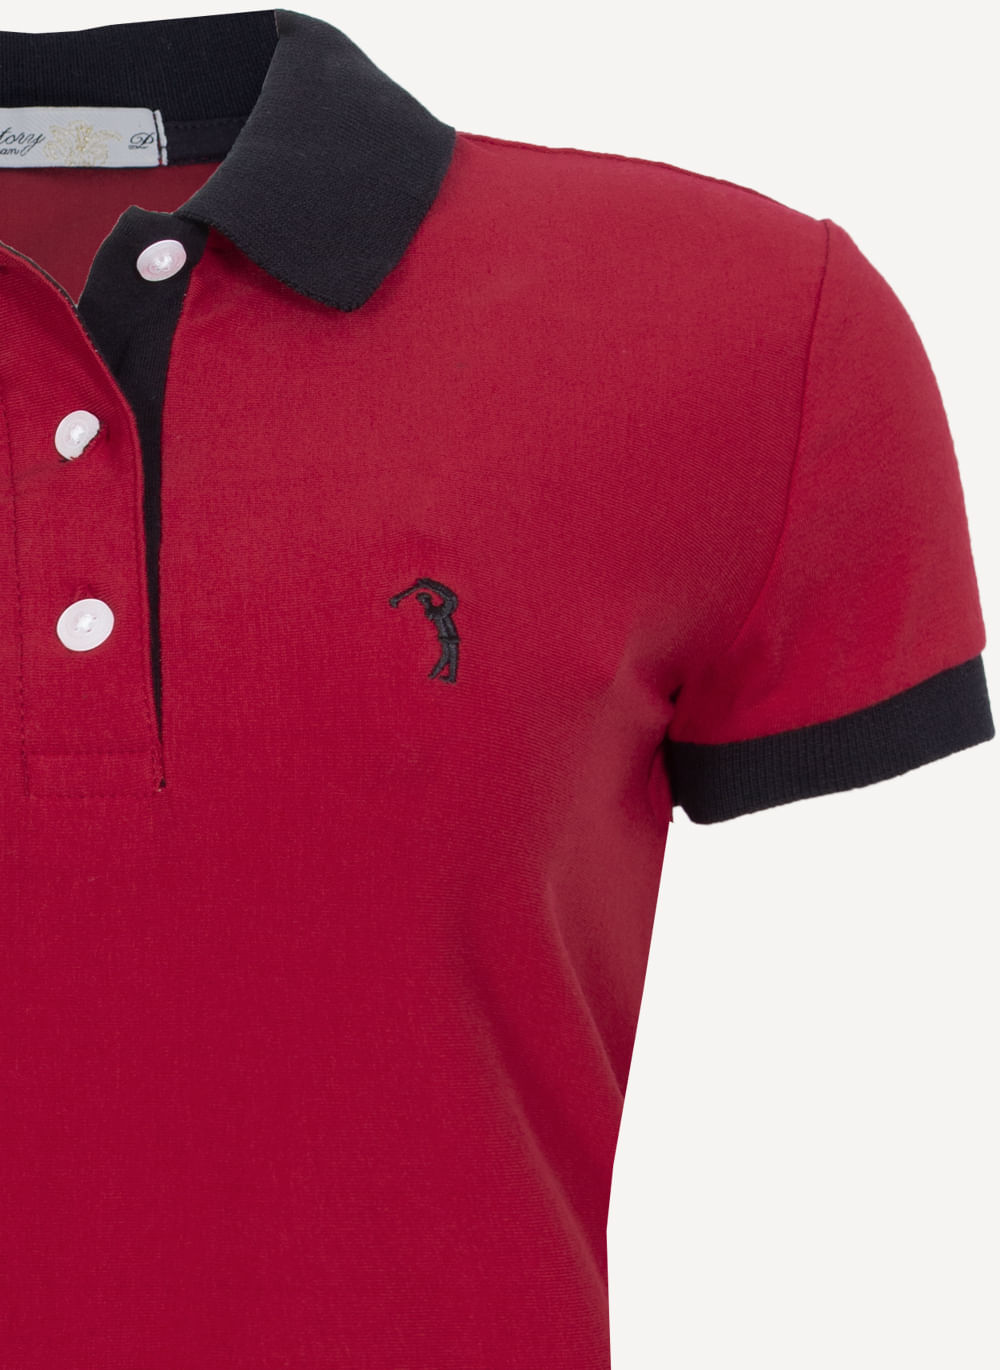 Camisa-Polo-Feminina-Aleatory-Prime-Vermelha-Vermelho-M